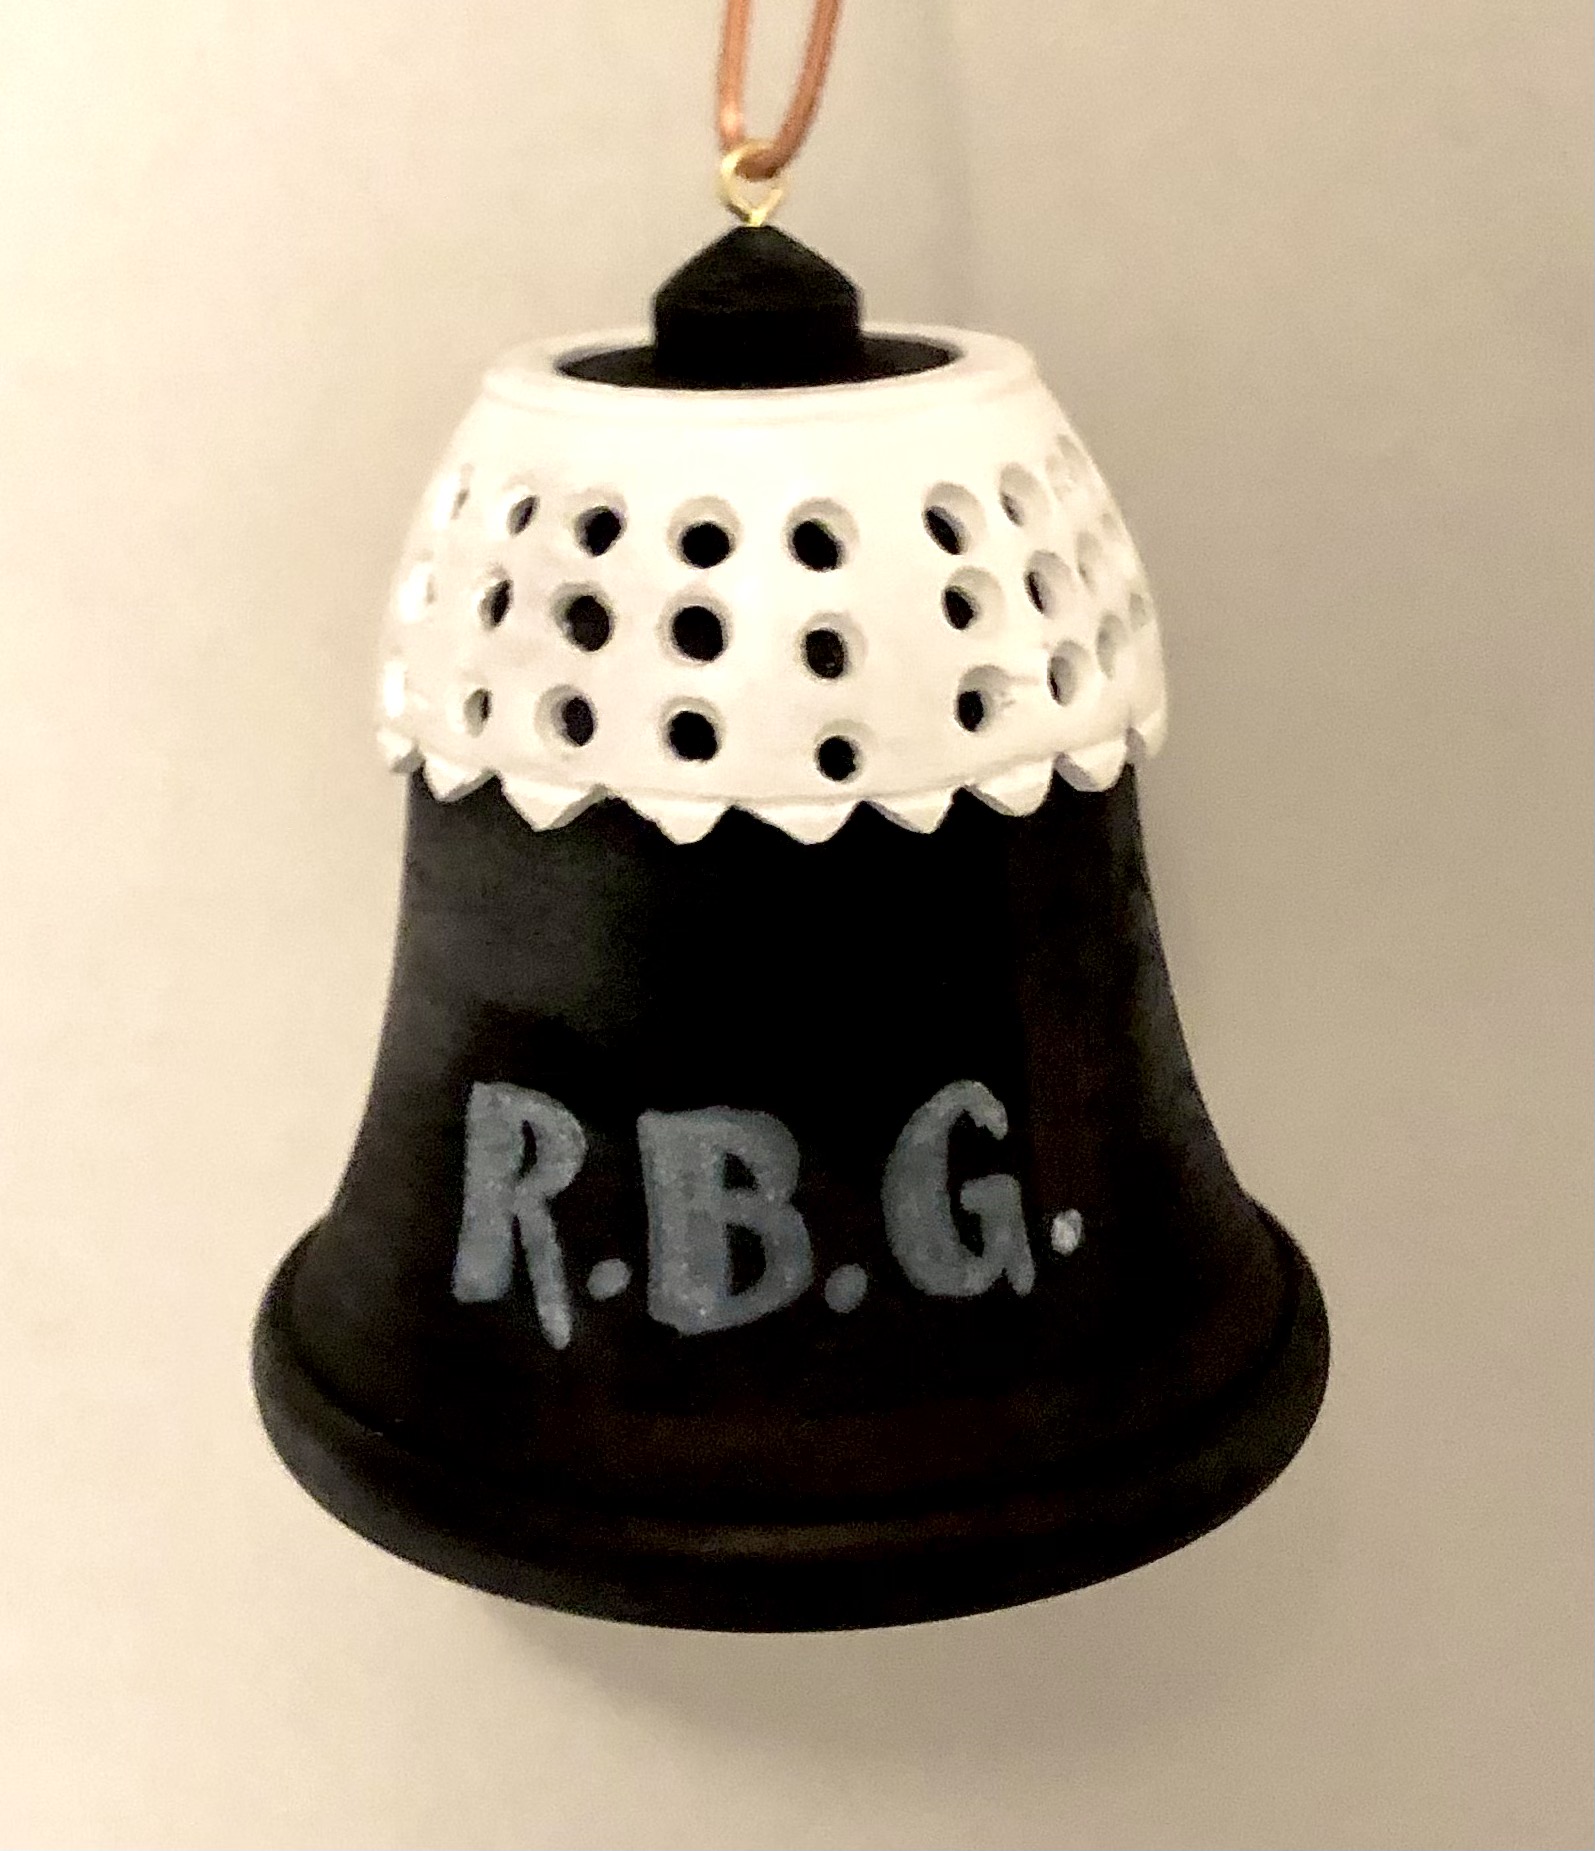 RBG ornament